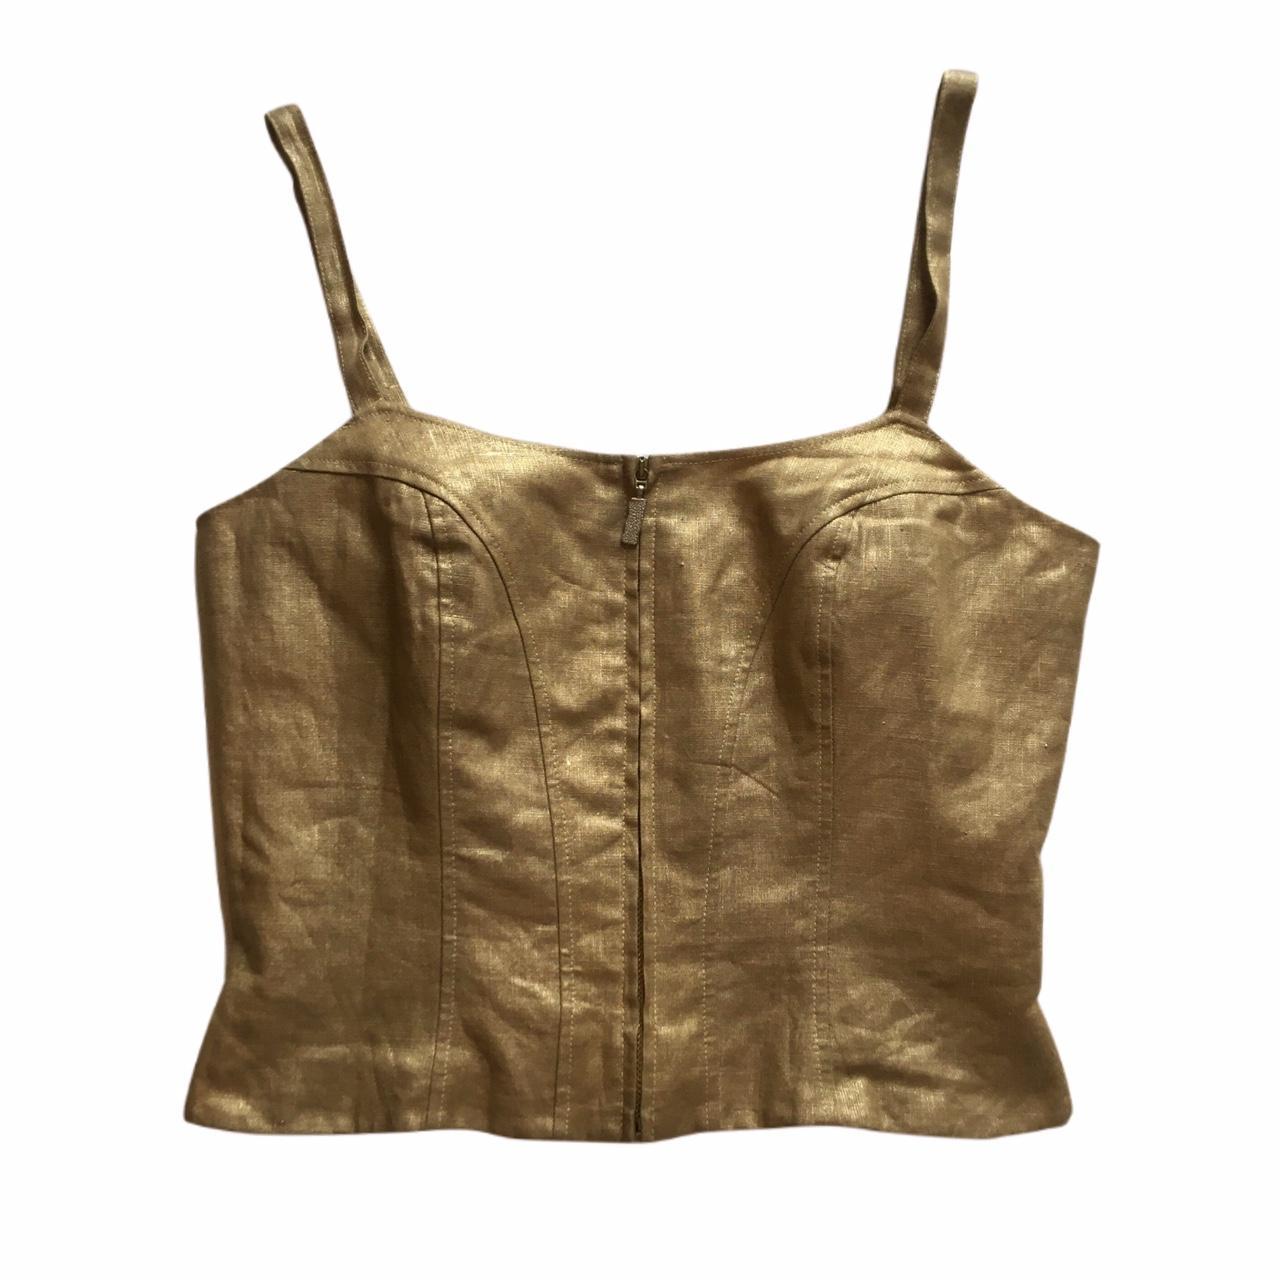 Betty barclay gold corset 25.5cm pit to hem 43cm pit... - Depop